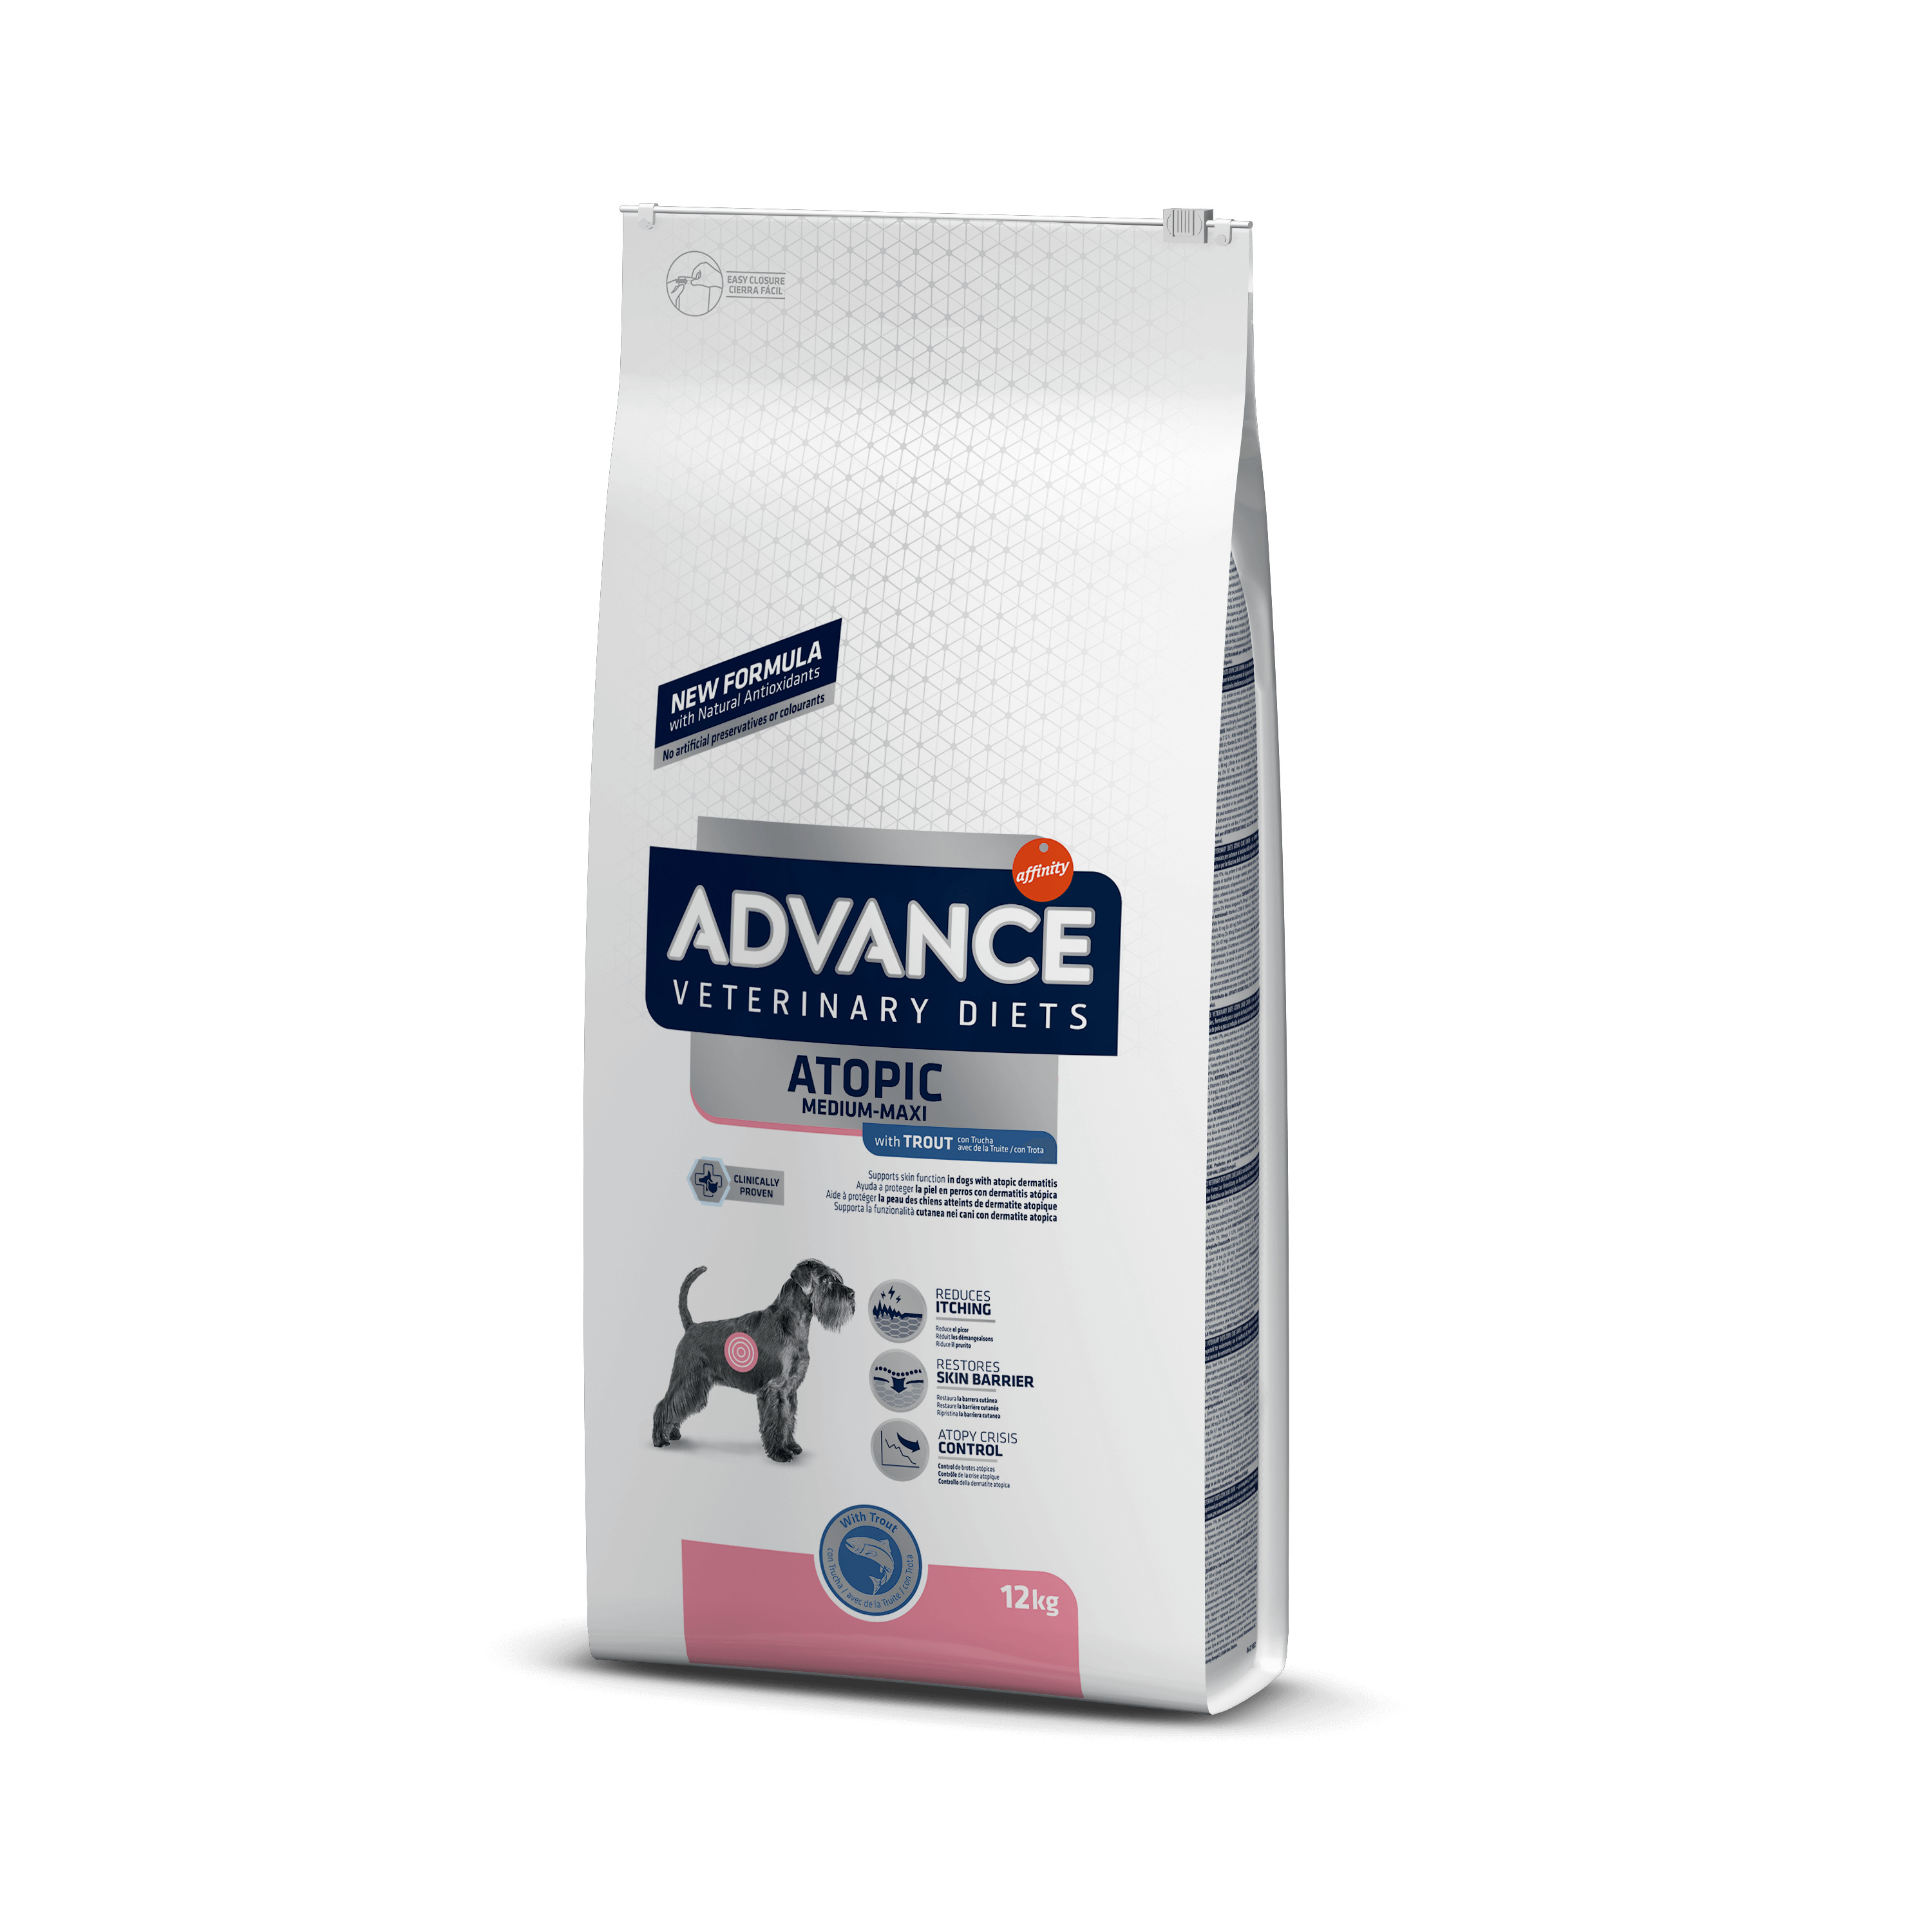 Afbeelding van 2 x 12 kg Advance Veterinary Diets Atopic Medium Maxi met forel hondenvoer